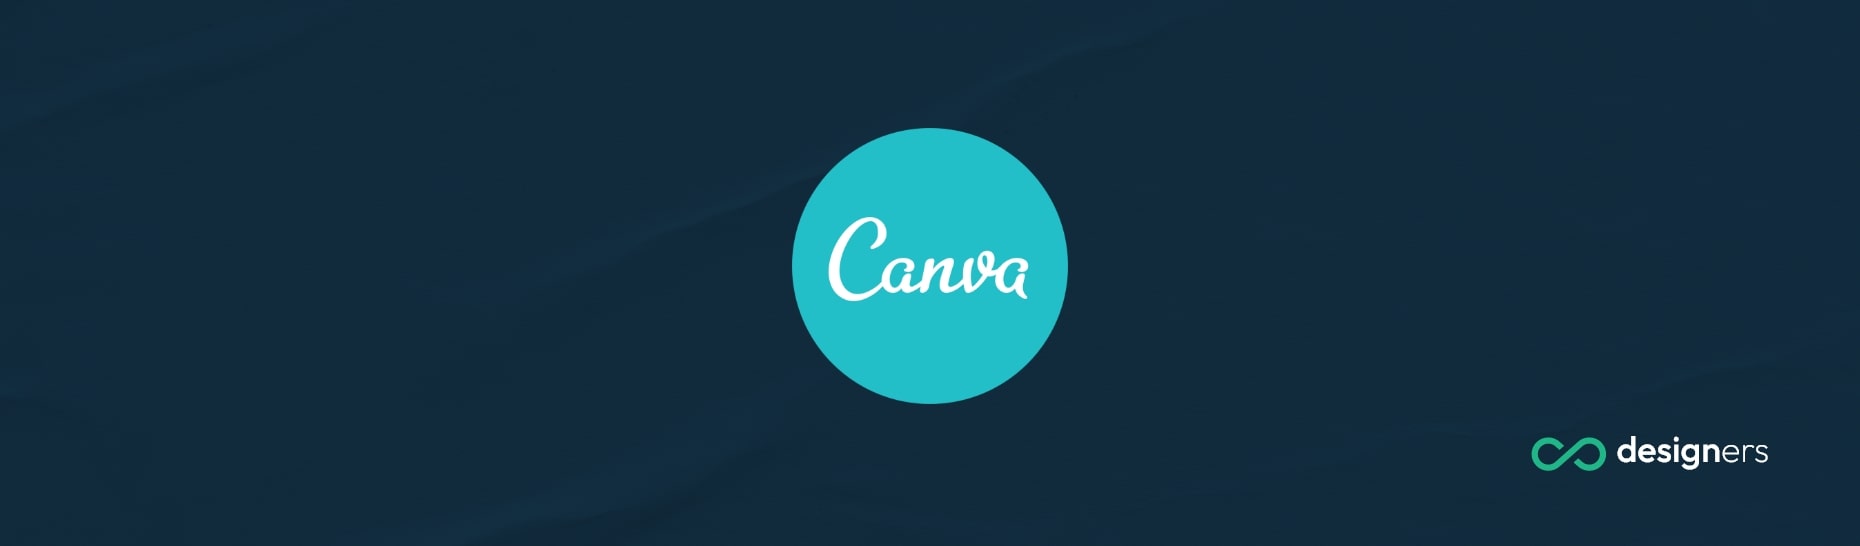 Does Canva Work on Google Chrome?